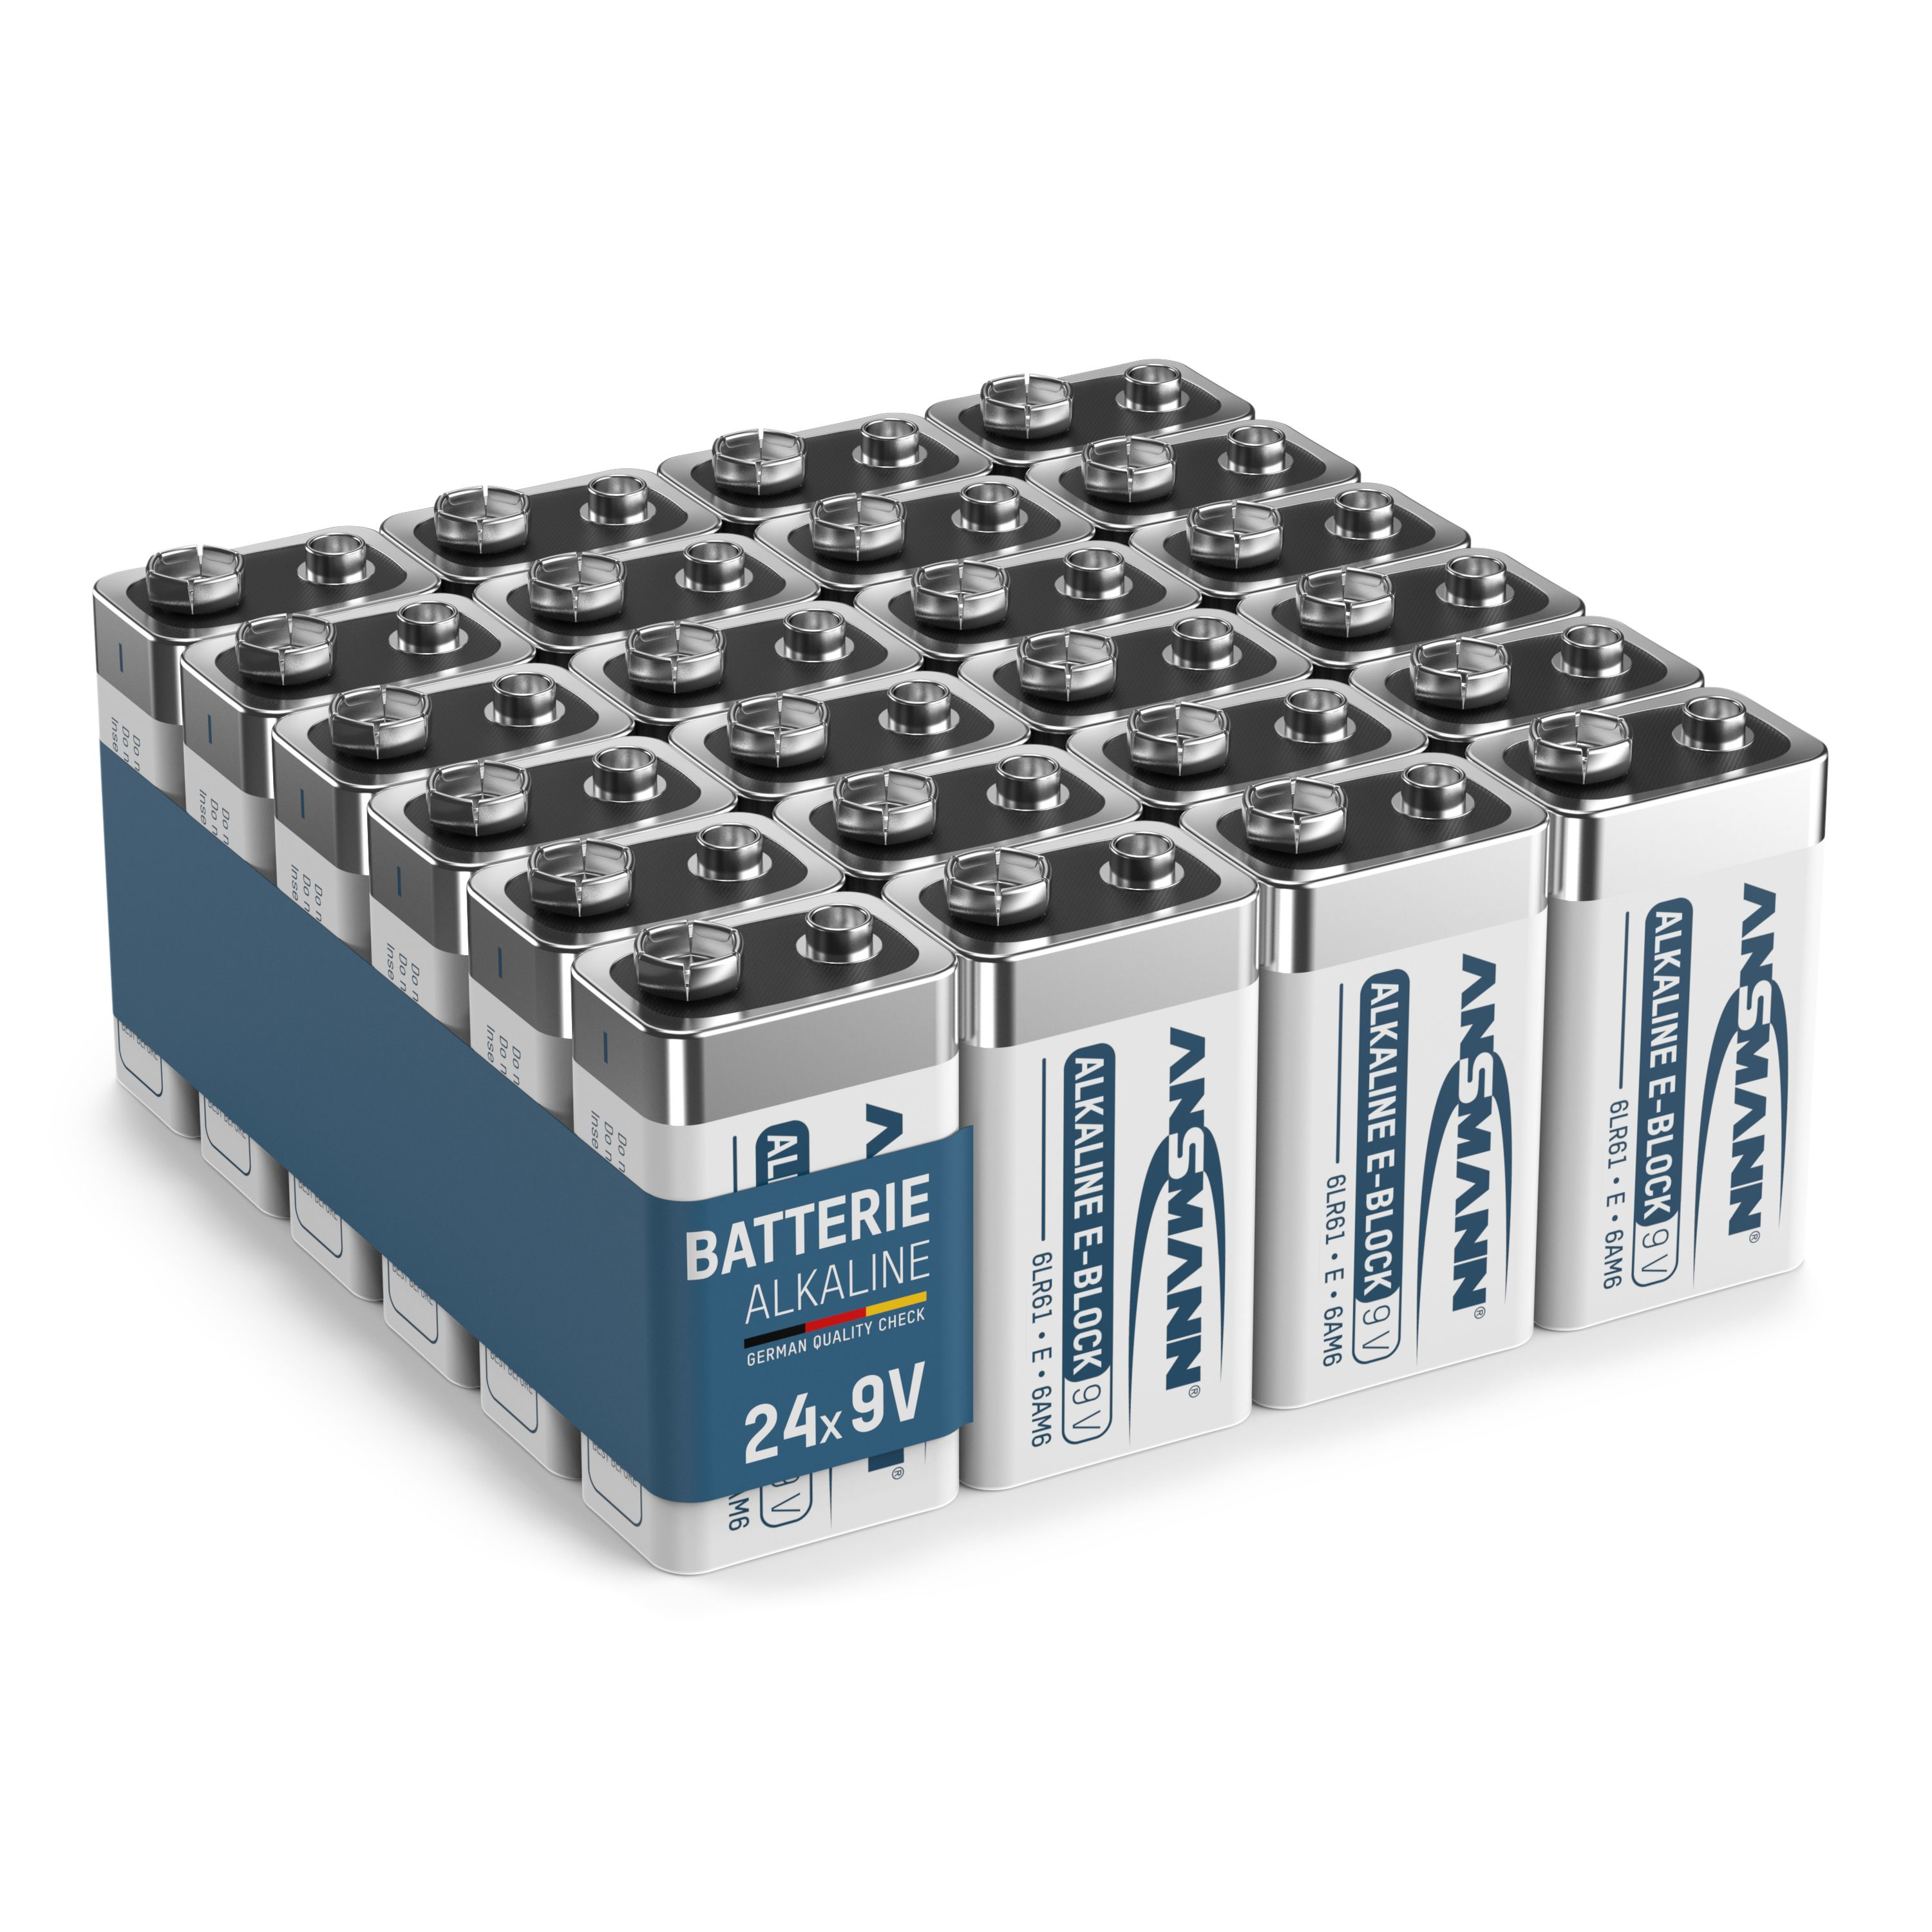 9 9V Batterie, ANSMANN Block für 9 9V Batterie, Alkaline Block Alarmanlagen, (24 ideal Rauchmelder, Alkaline Brandmelder E Stück) - Volt Volt longlife